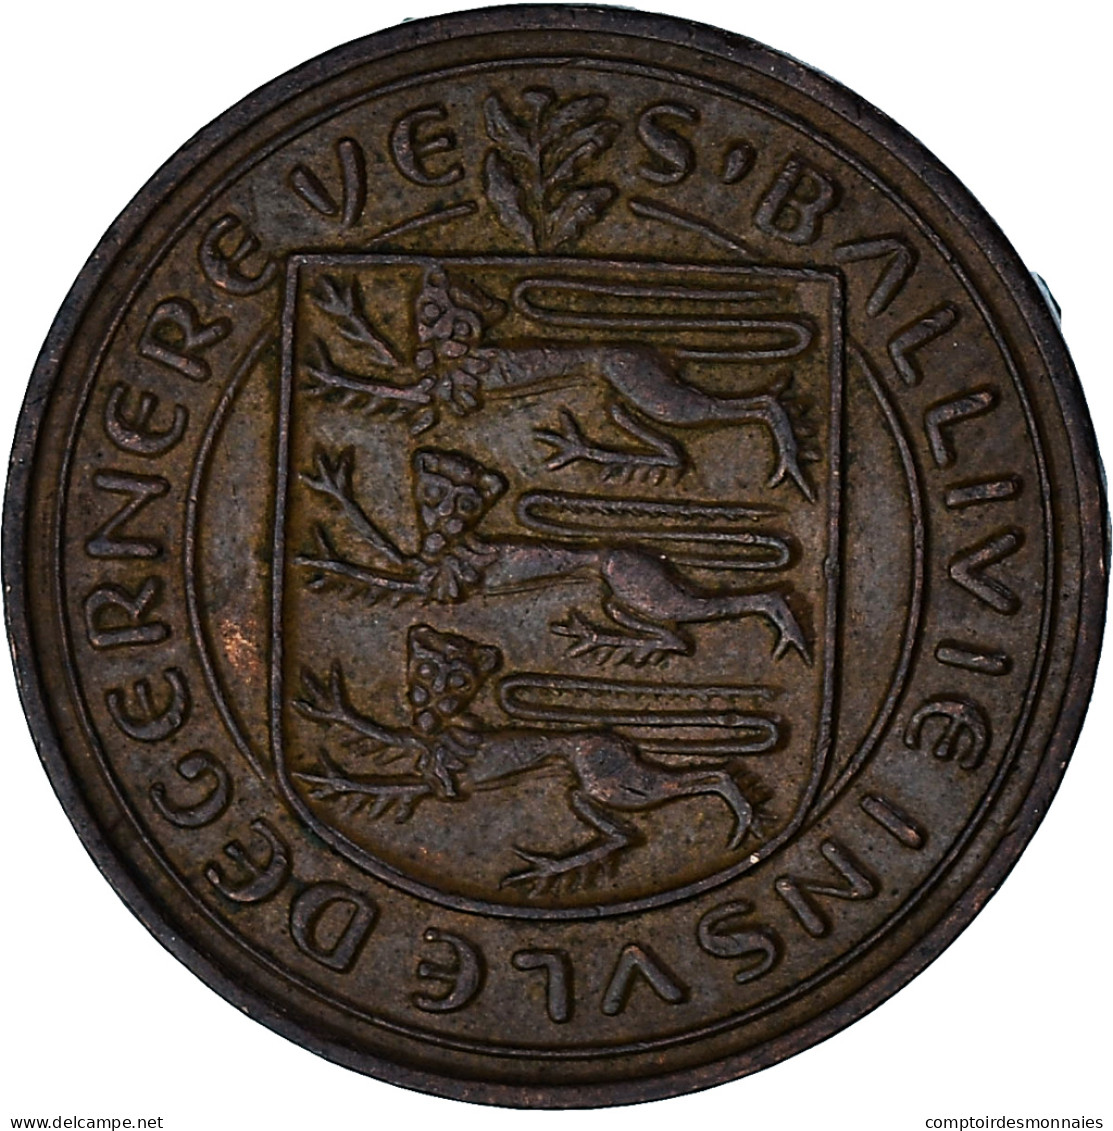 Guernesey, Elizabeth II, 2 New Pence, 1971, Bronze, TTB, KM:22 - Guernesey